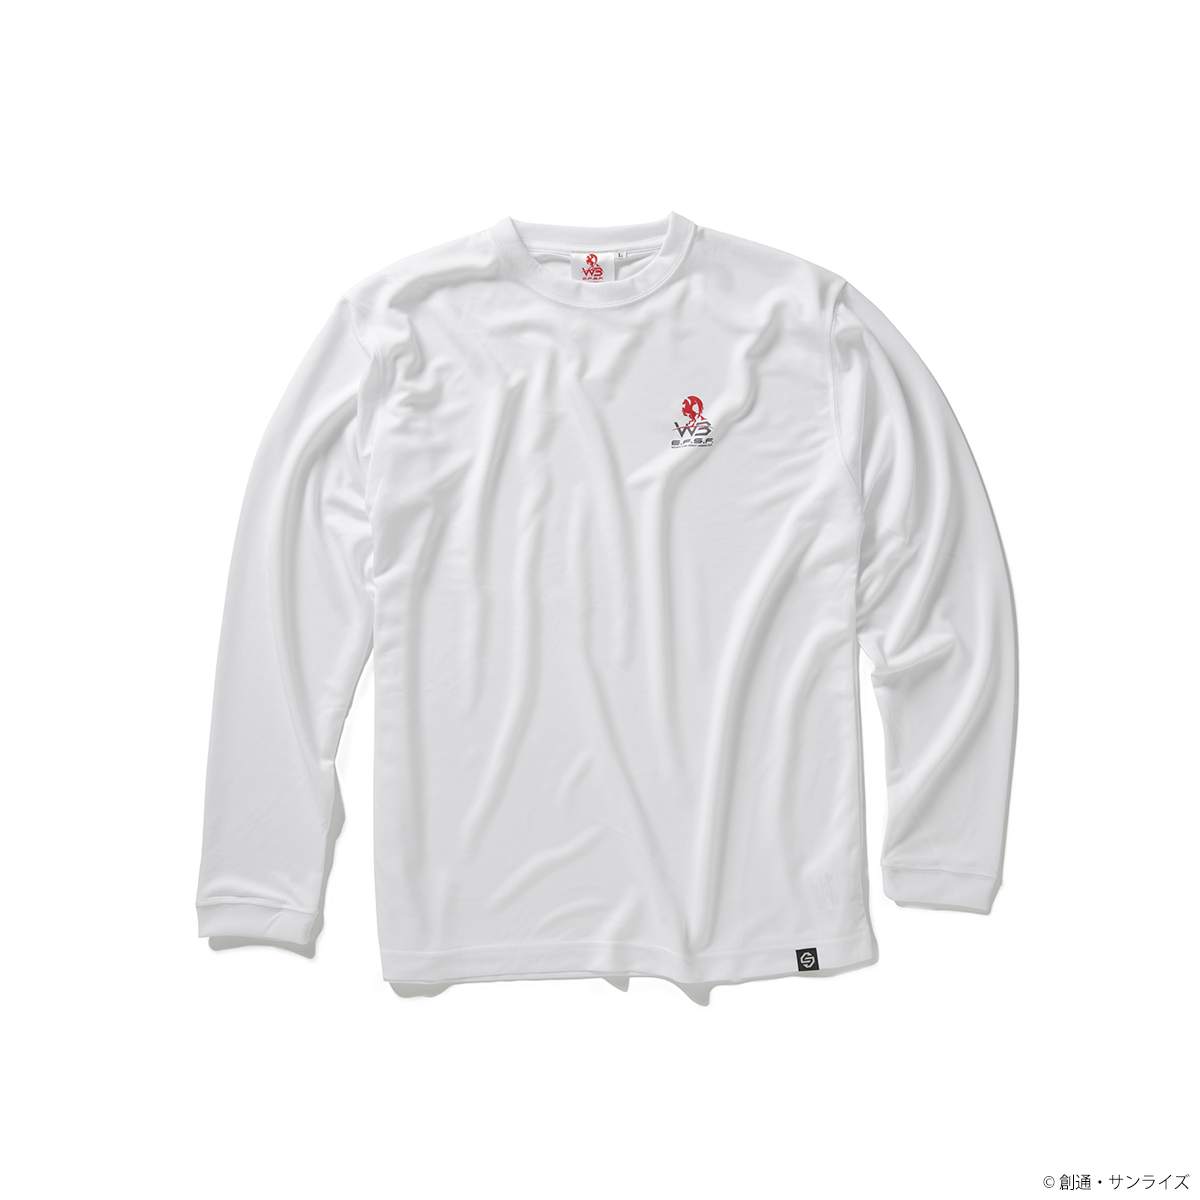 STRICT-G 『機動戦士ガンダム』 WHITE BASE ロングスリーブトレーニングTシャツ